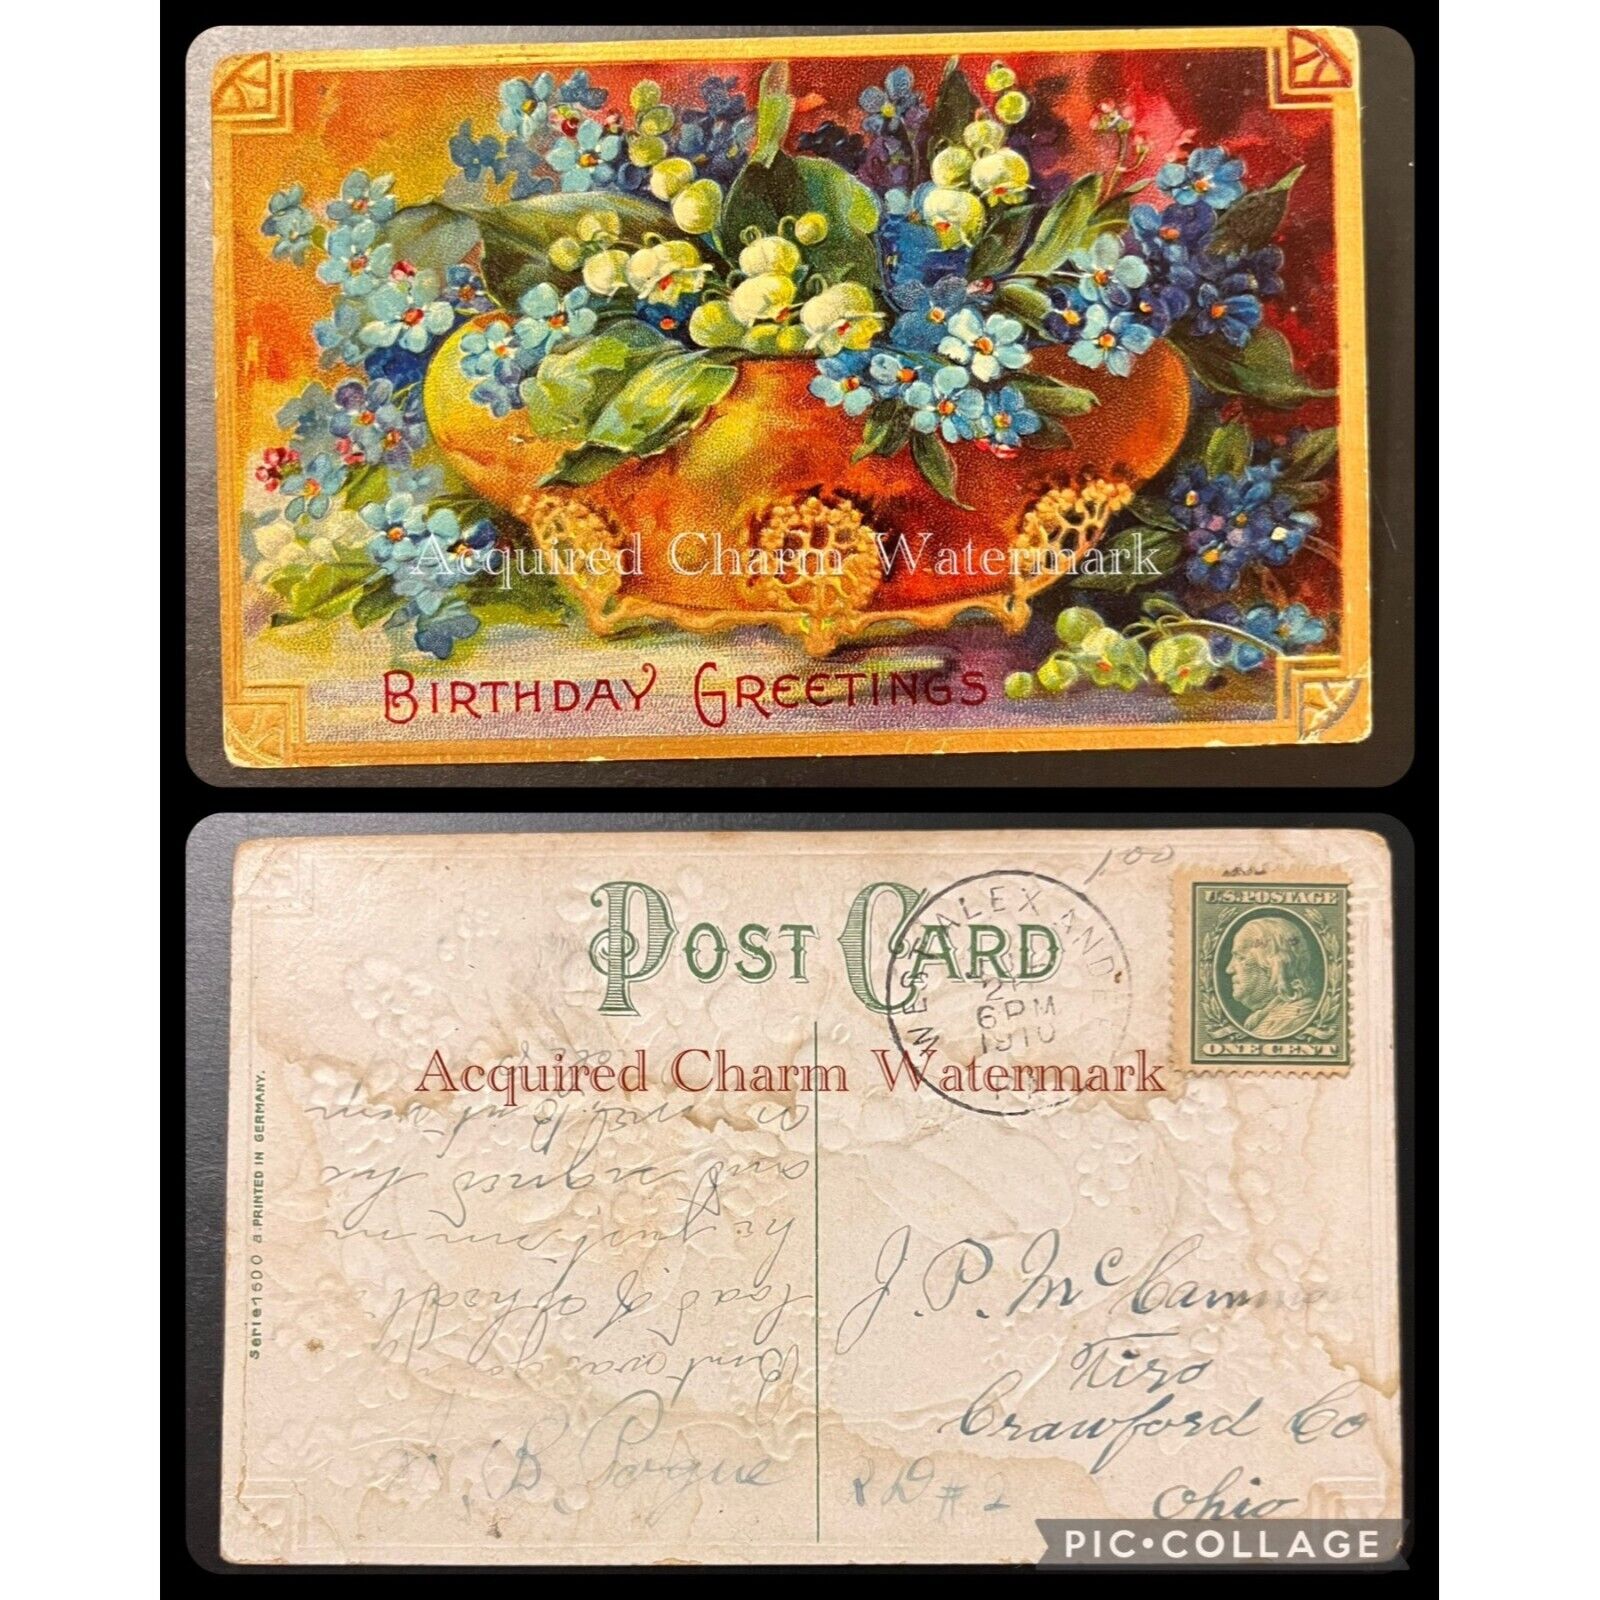 Antqiue Postcard, Birthday Greetings, July 26, 1910